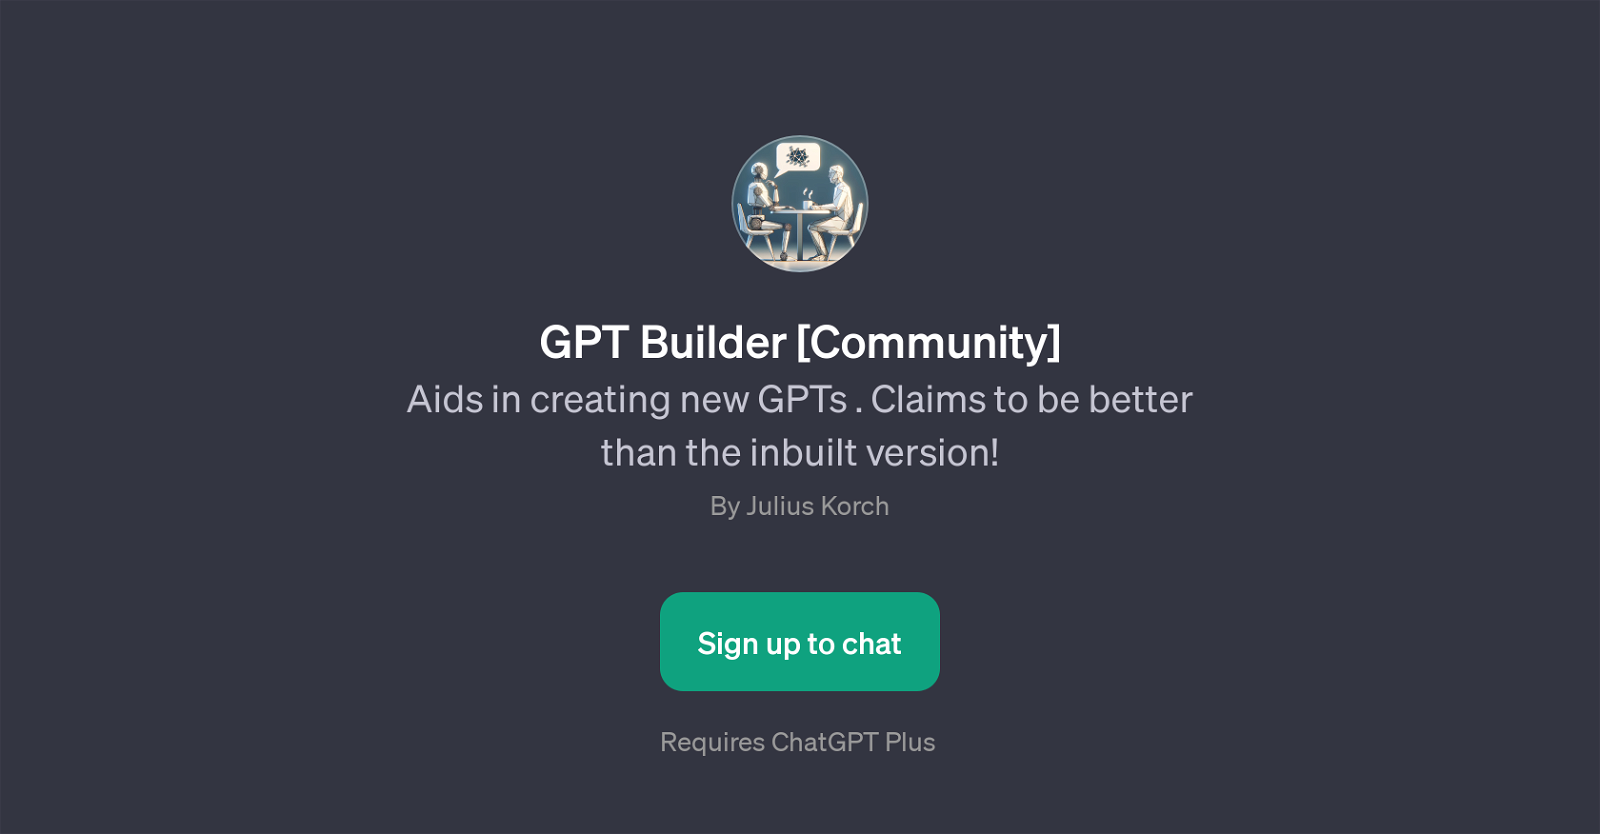 GPT Builder [Community] website